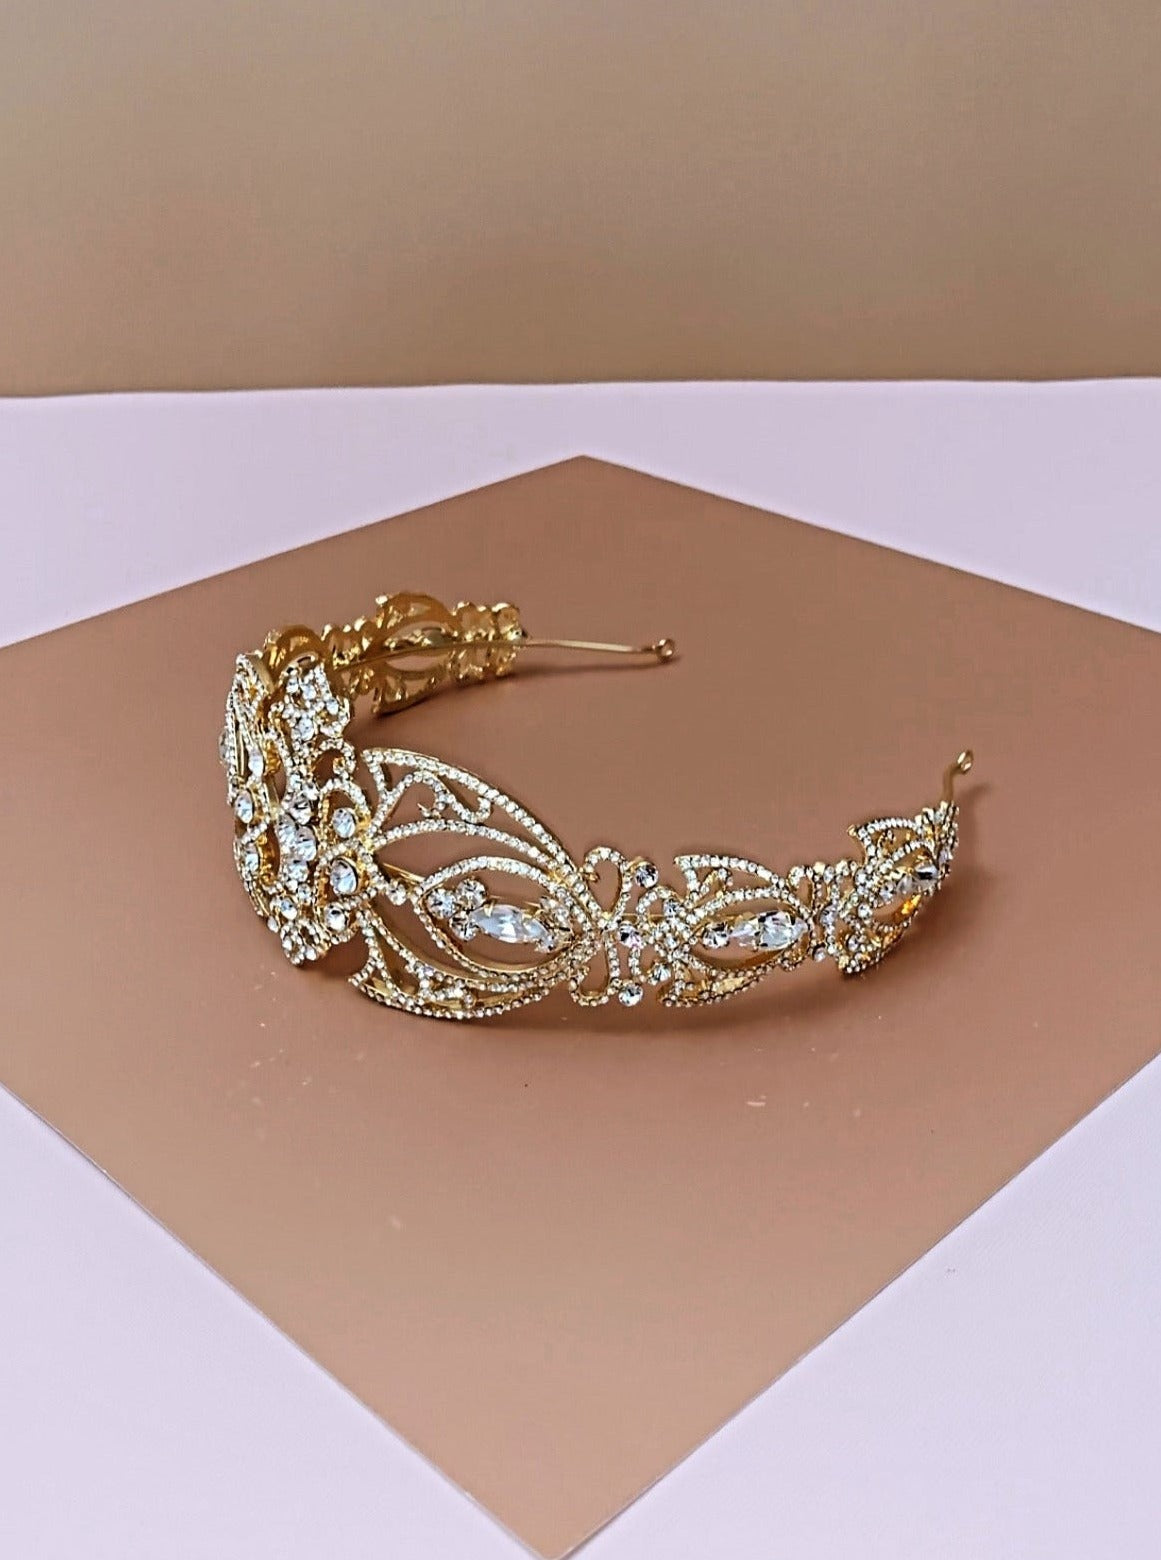 LEONORA Swarovski Most Magnificent Bridal Headpiece - SAMPLE SALE